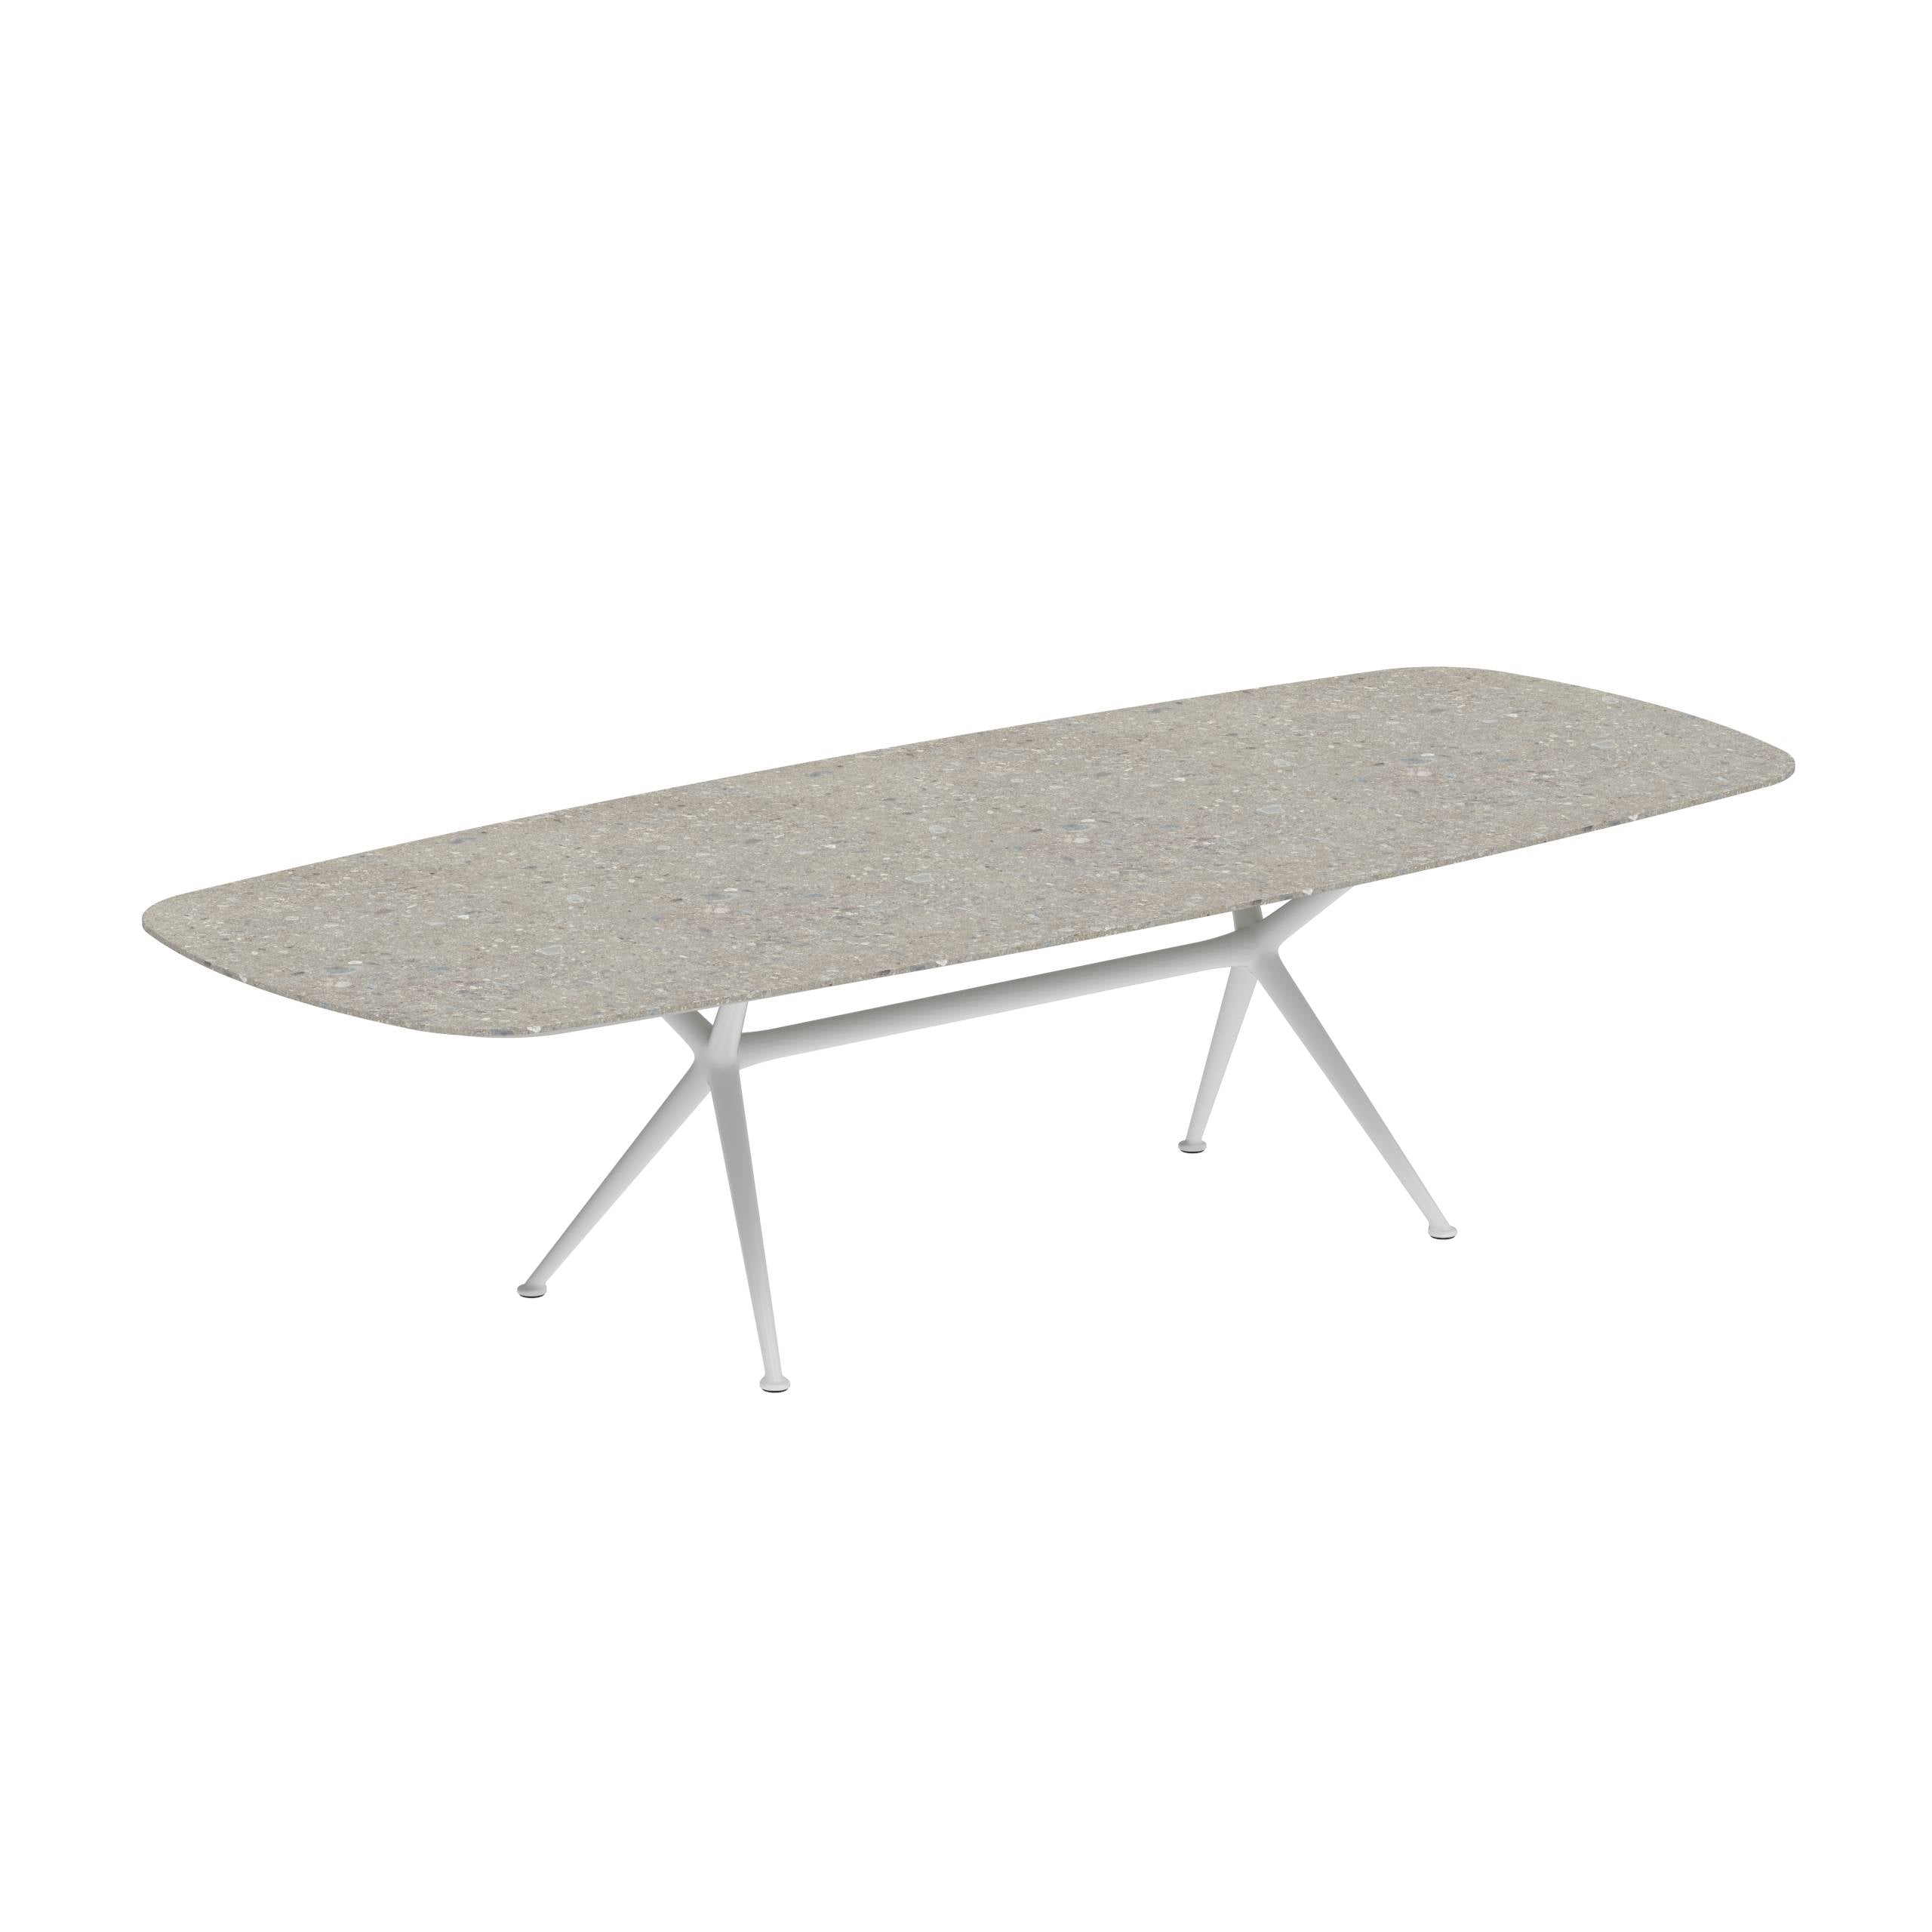 Exes Table 300x120cm Alu Legs White - Table Top Ceramic Ceppo Dolomitica